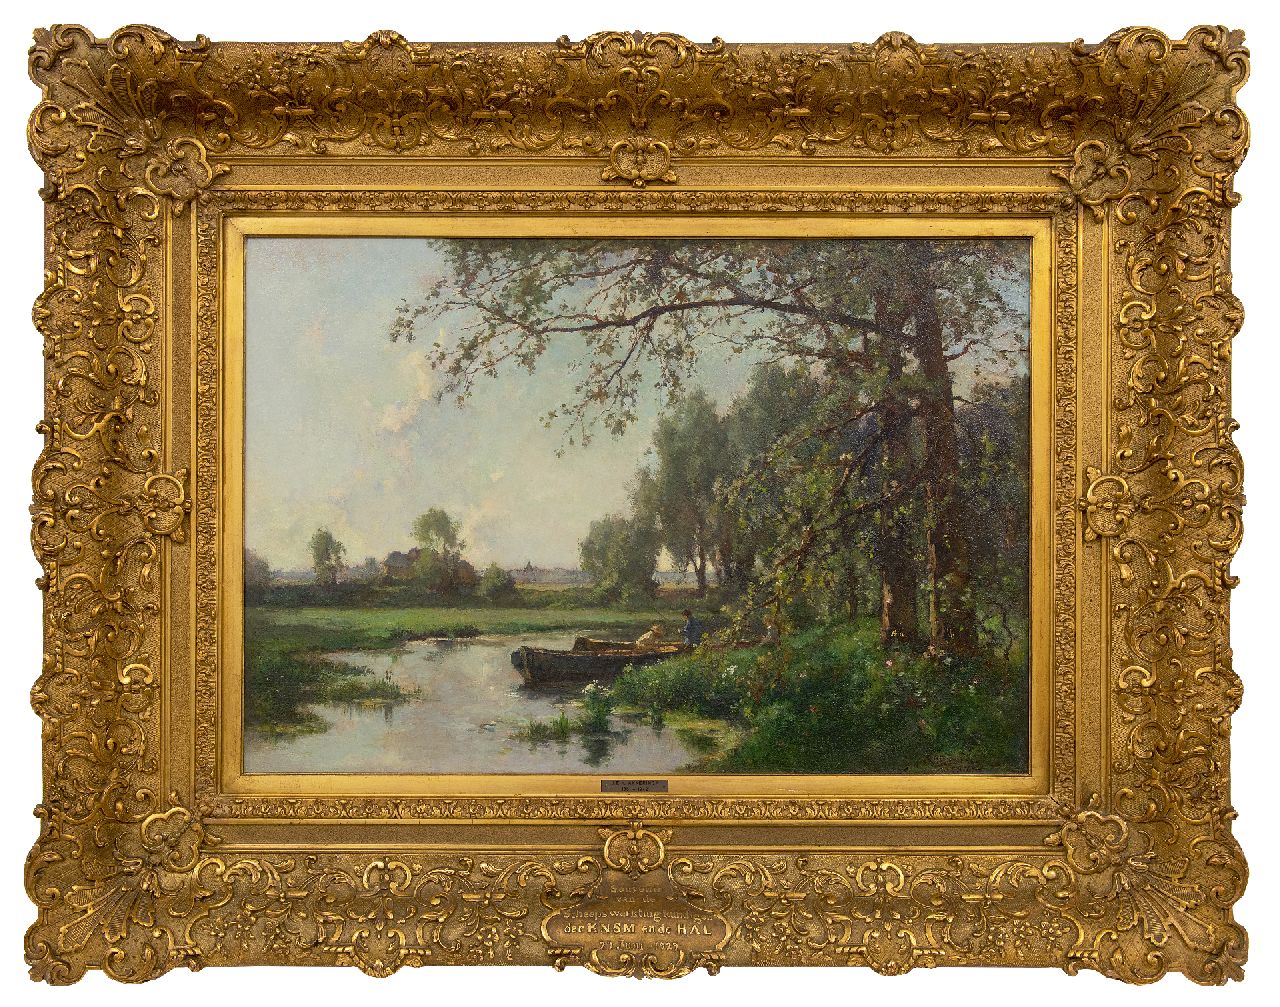 Akkeringa J.E.H.  | 'Johannes Evert' Hendrik Akkeringa | Paintings offered for sale | Landscape with two fishermen in a boat, oil on canvas 46.4 x 67.4 cm, signed l.r.